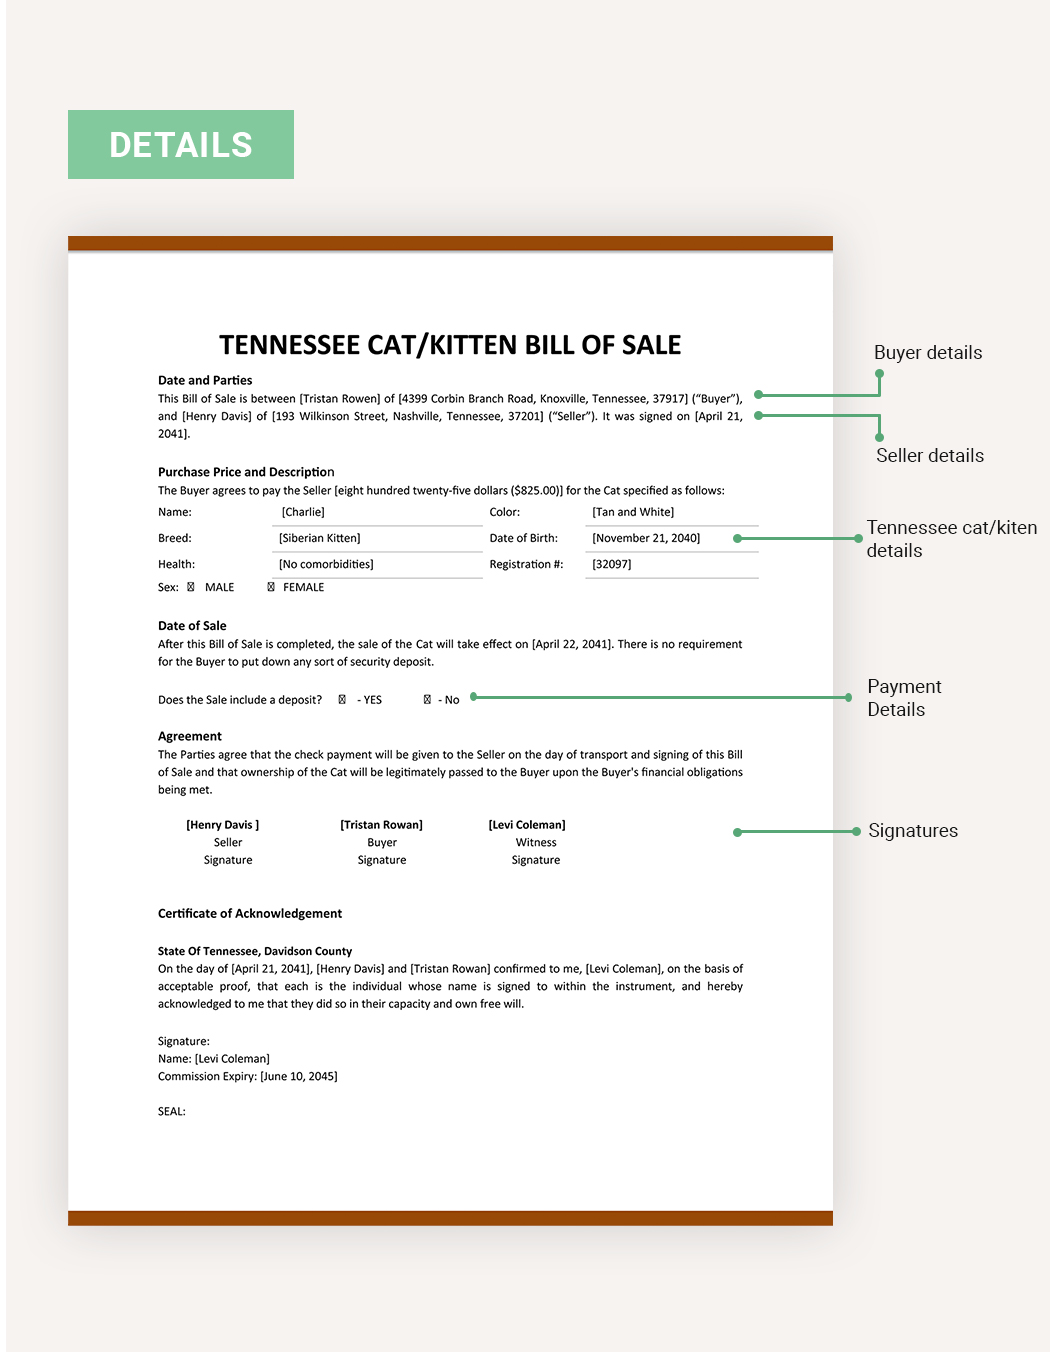 Tennessee Cat / Kitten Bill Of Sale Form Template